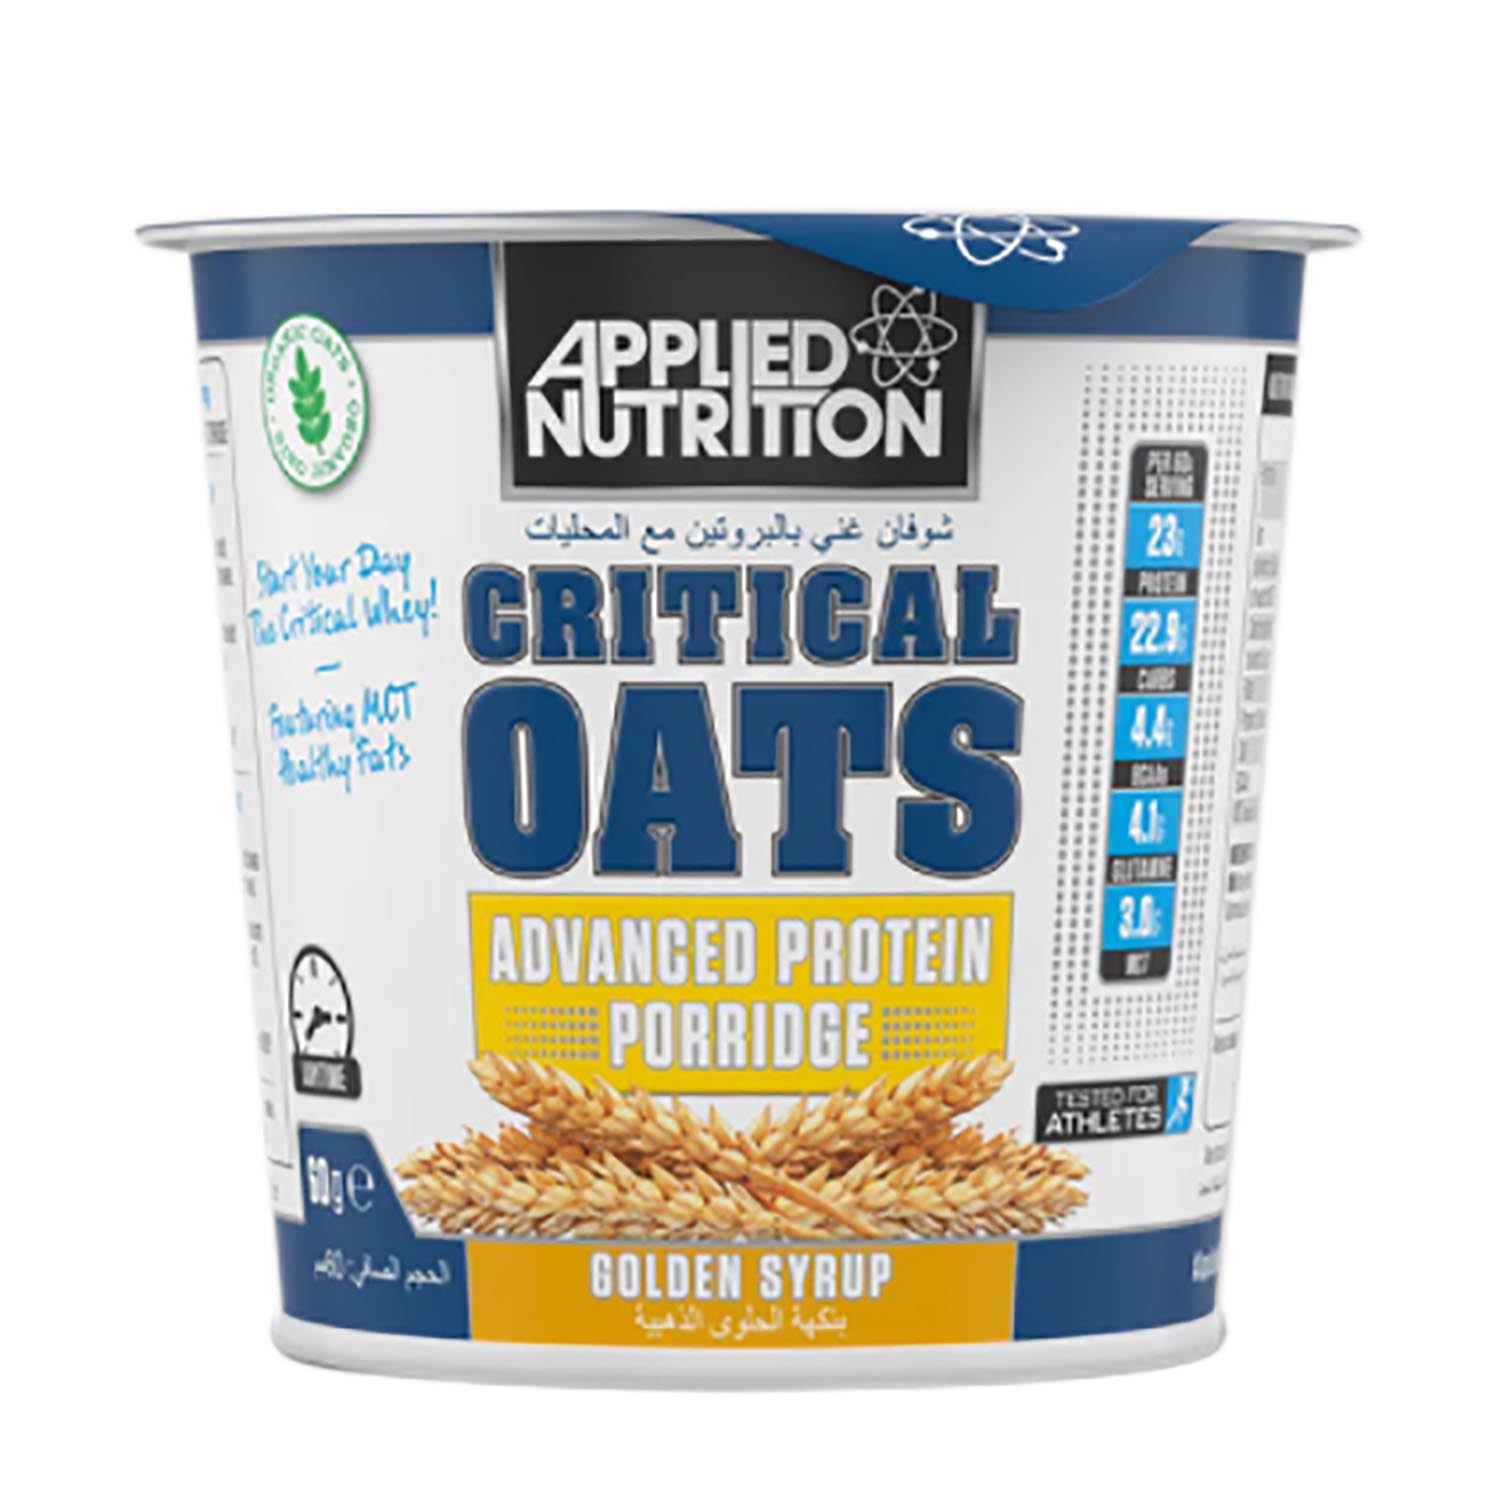 Critical Oats Advanced Protein Golden Syrup Porridge Image